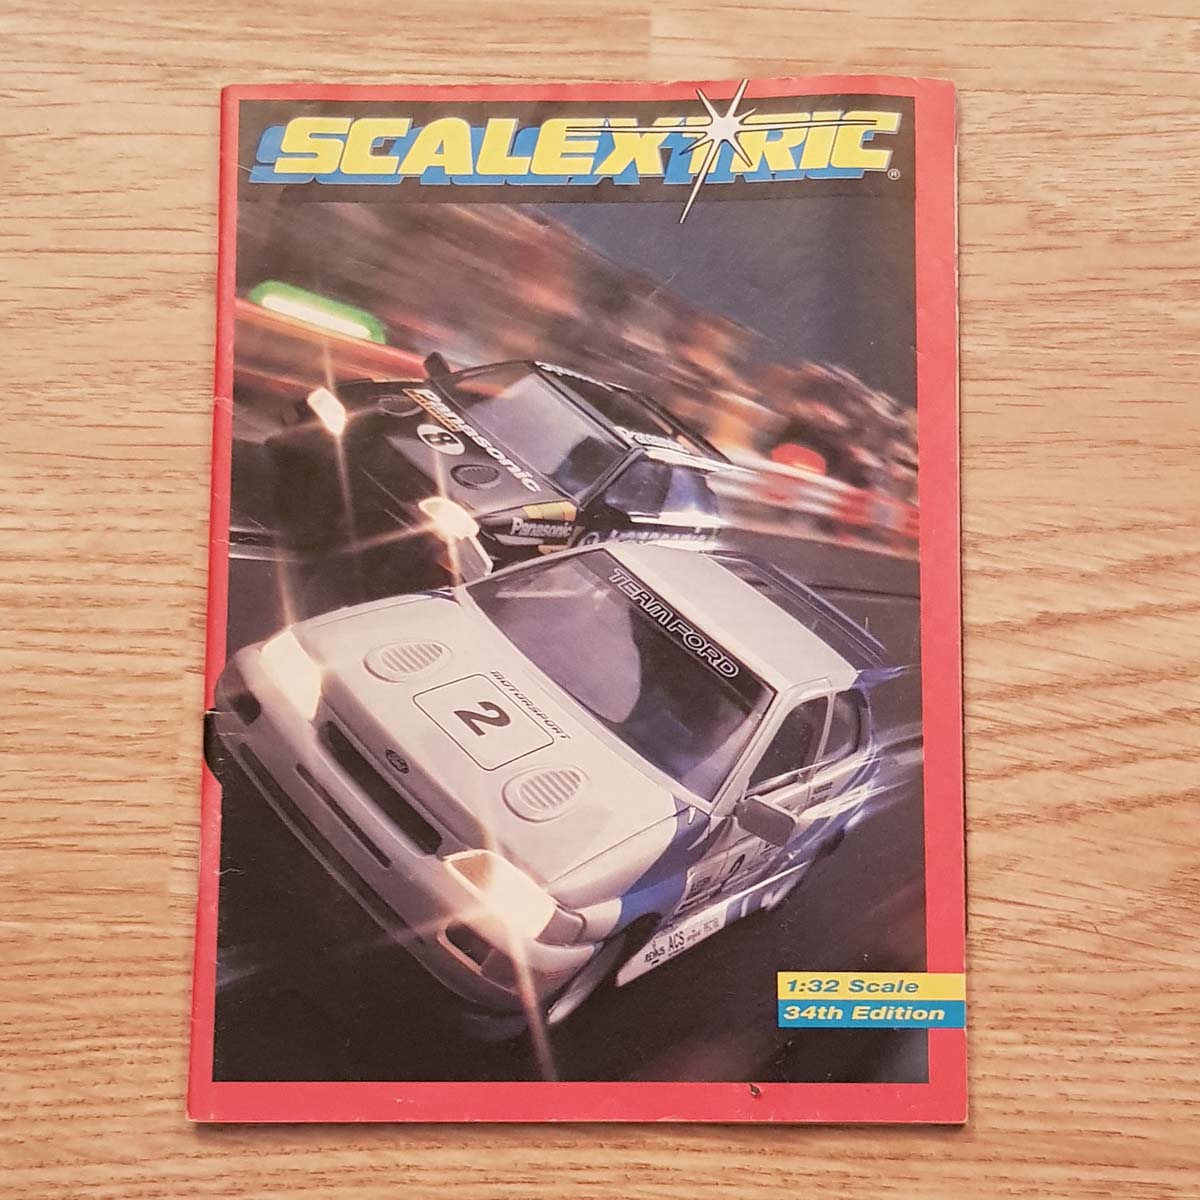 Scalextric Catalogue Literature Magazine - C507 1993 34th Edition A5 Size